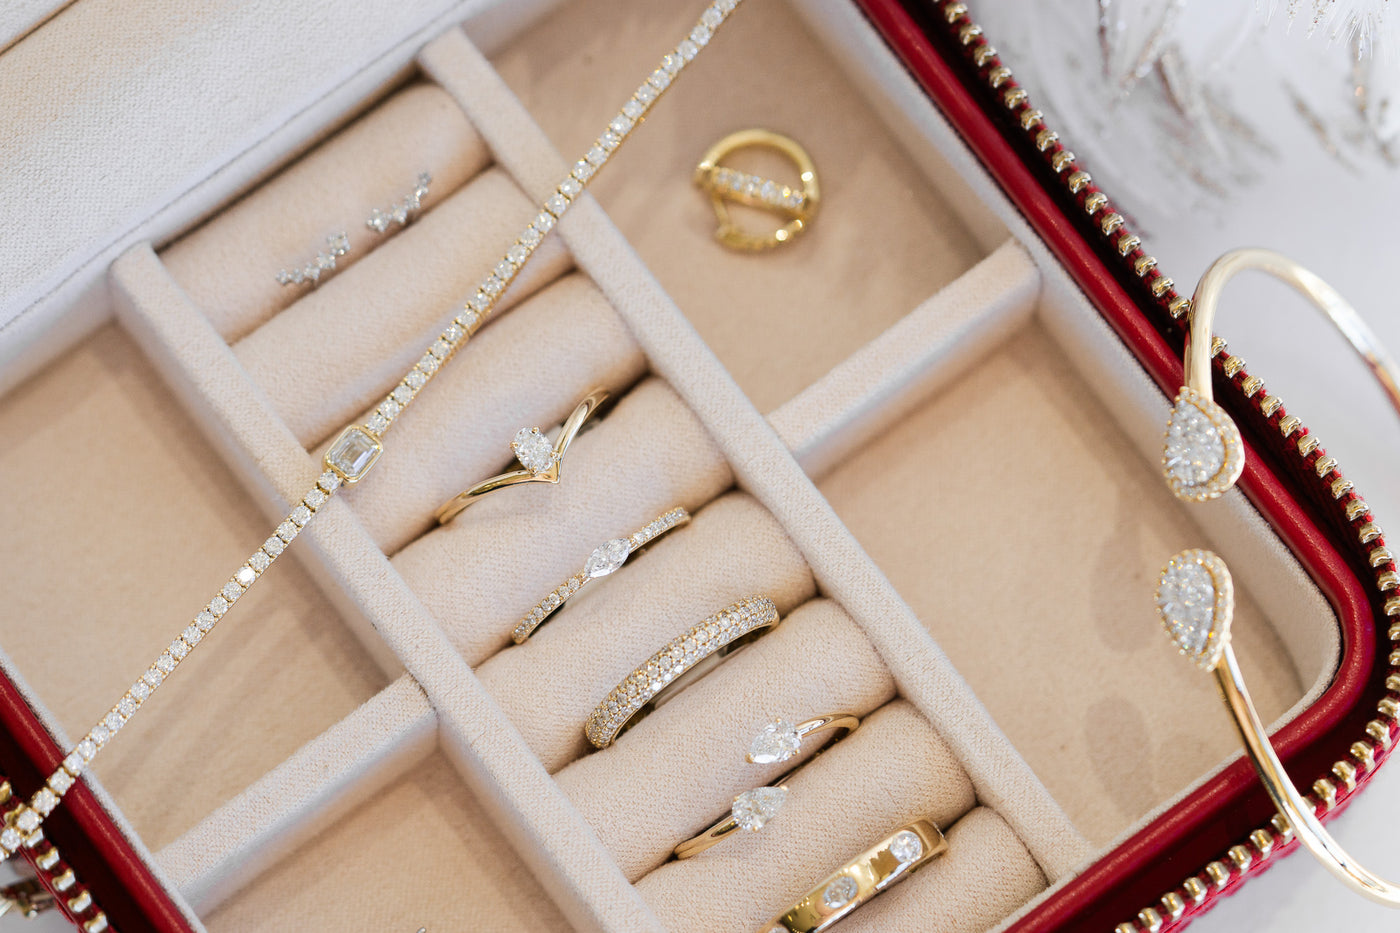 Diamond and gold jewelry. Diamond rings, tennis bracelets, and diamond hoops at Bichsel Jewelry in Sedalia, MO.